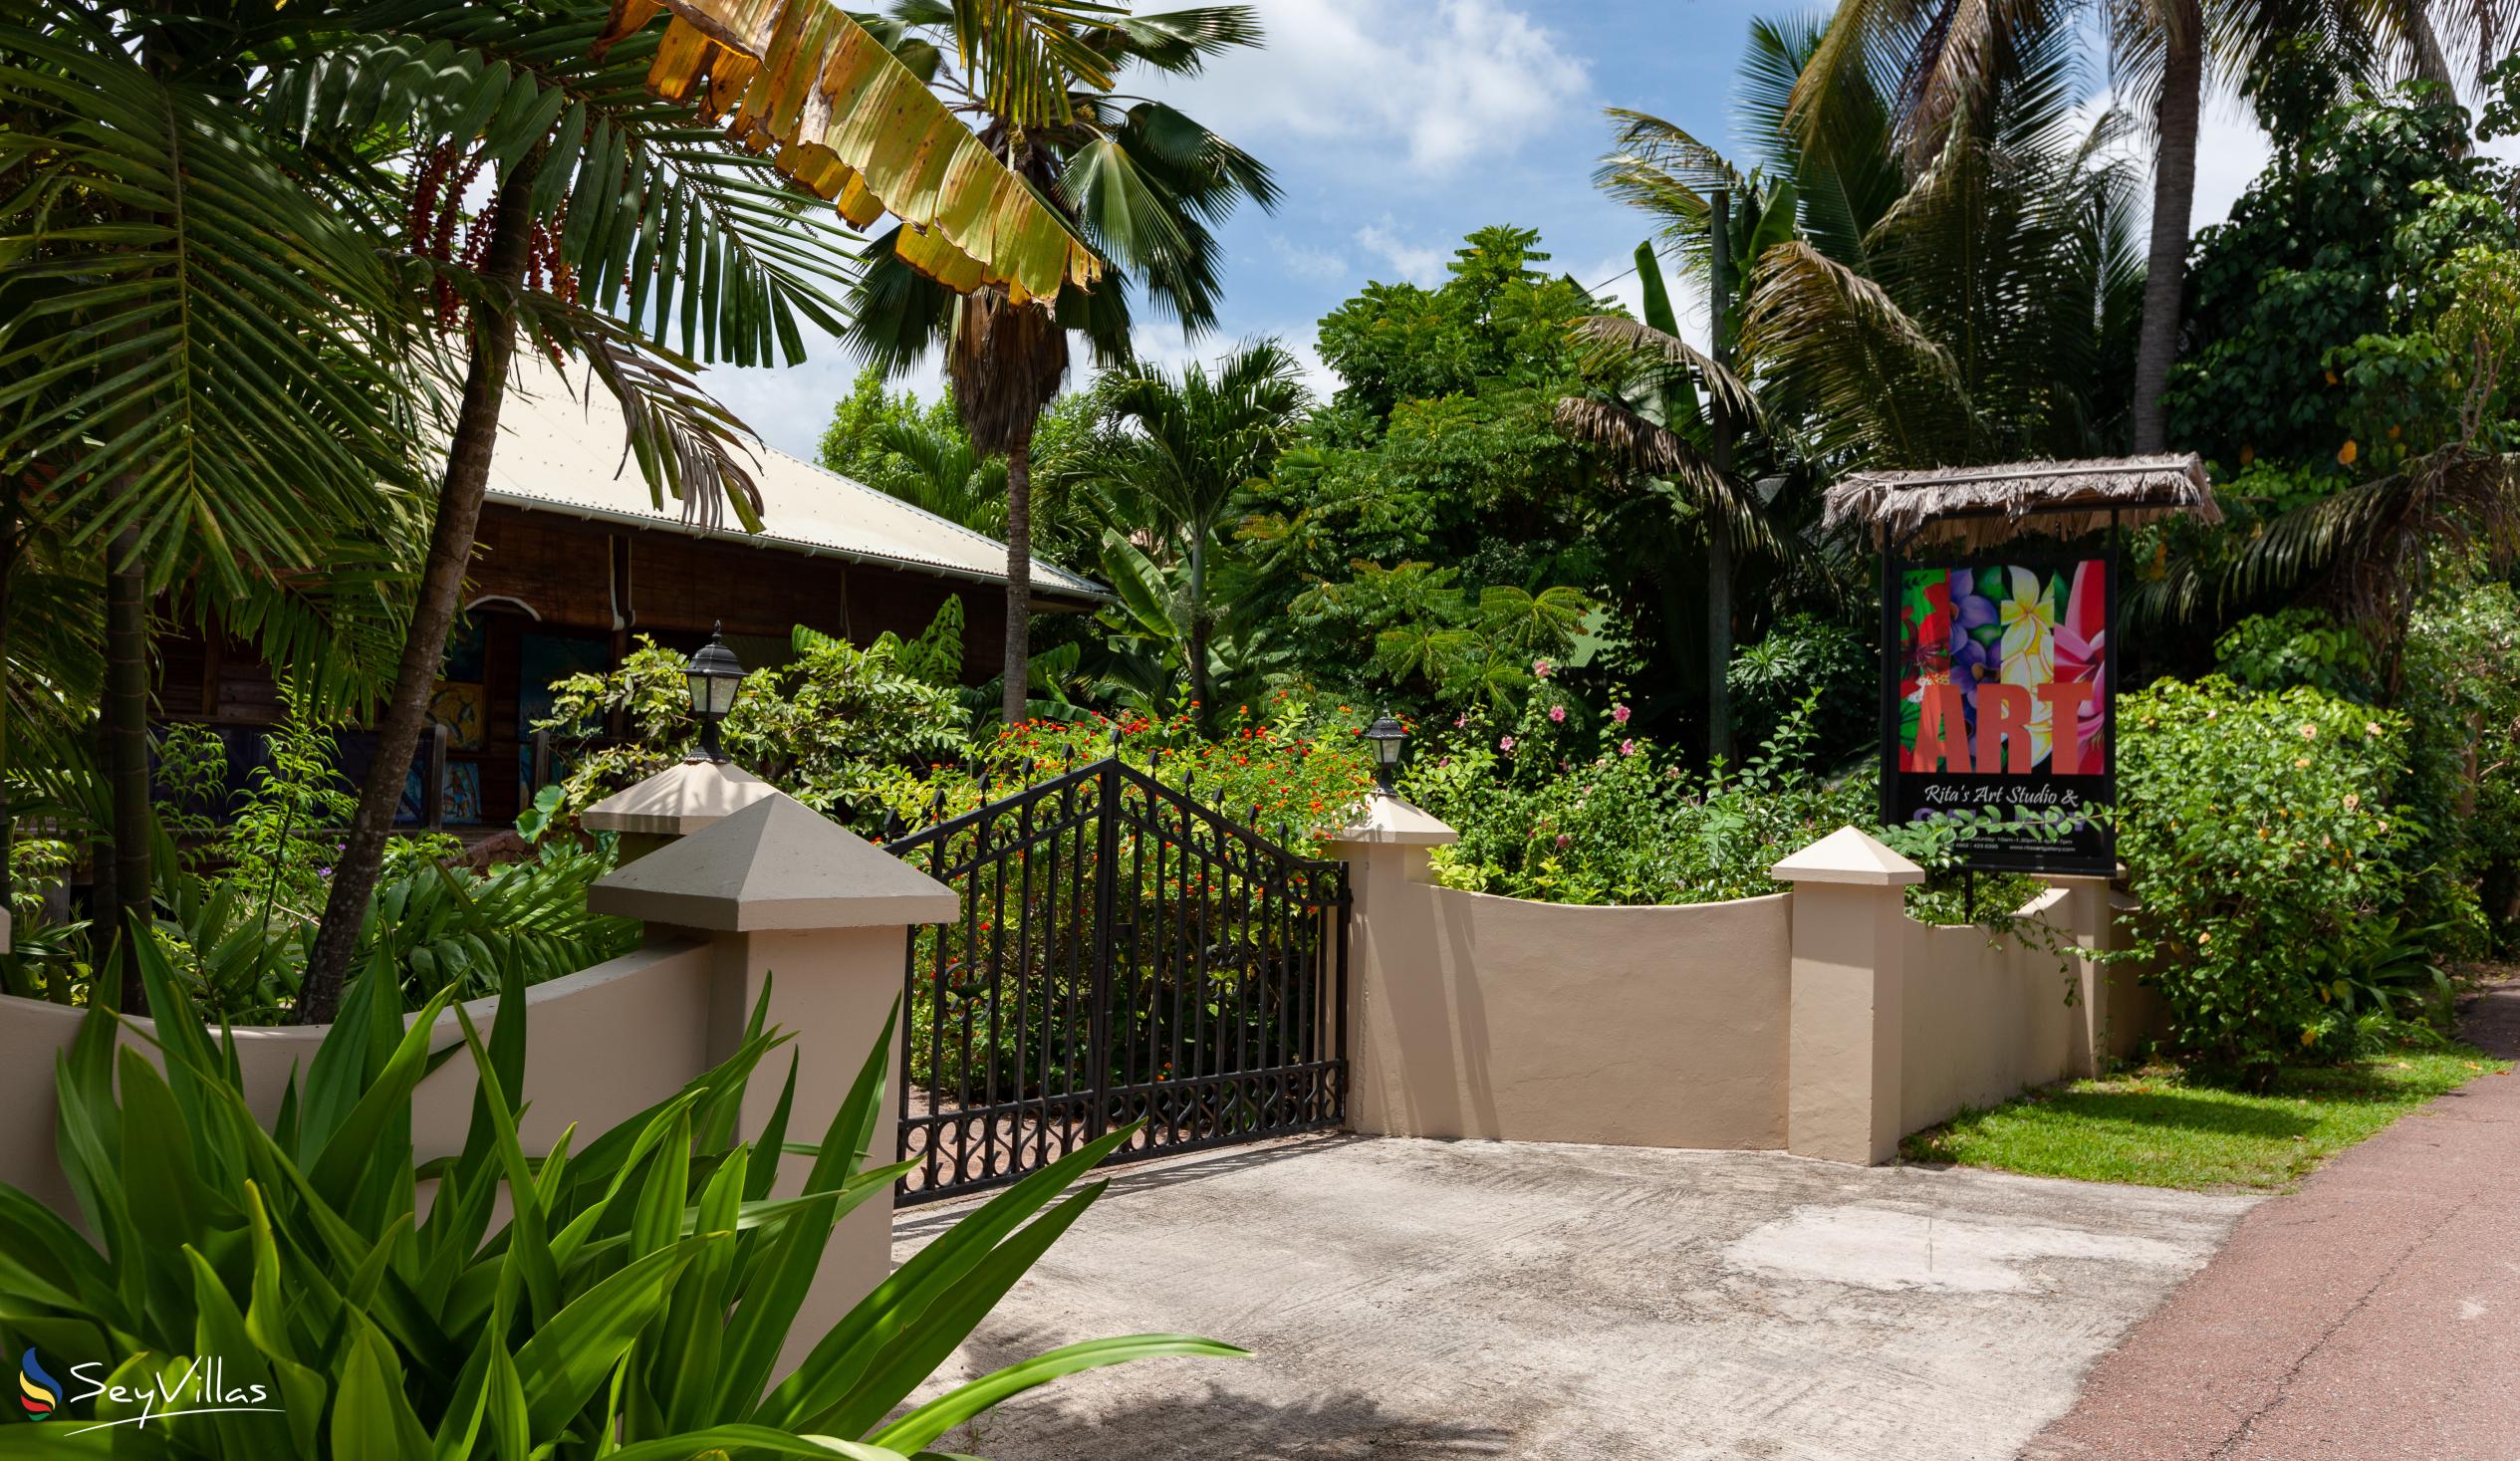 Foto 3: Villa Bananier - Posizione - Praslin (Seychelles)